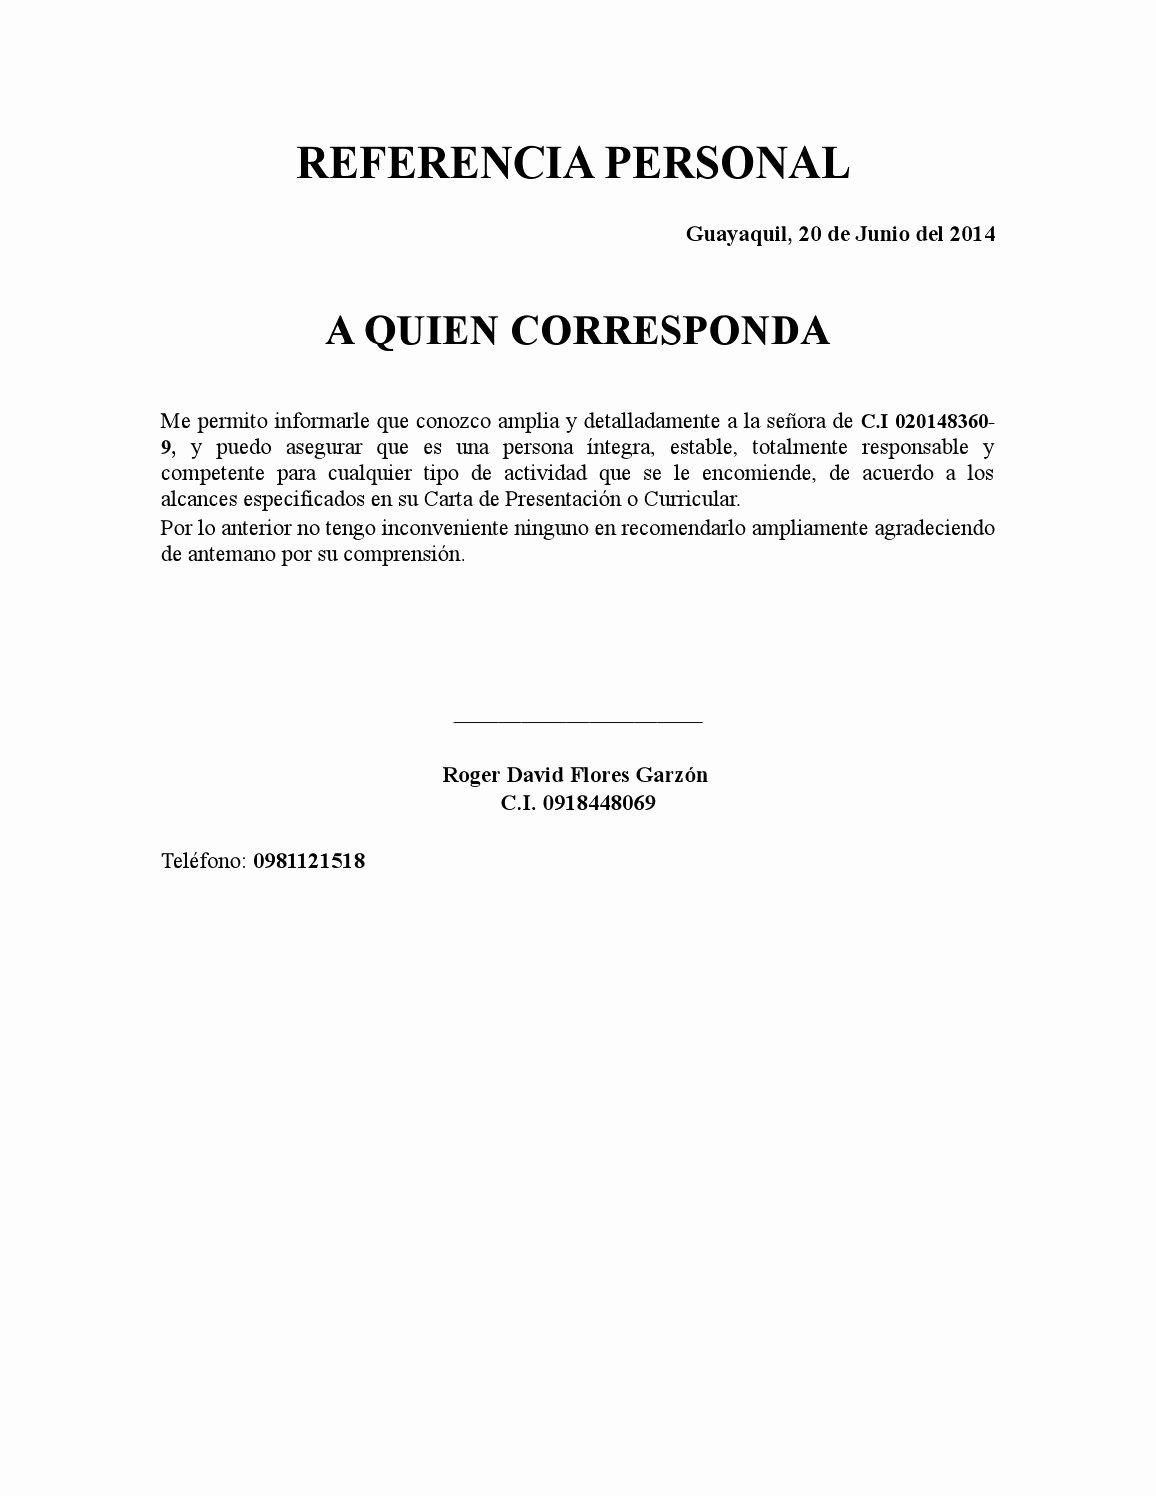 Carta De Recomendacion Laboral Pdf Best Of Referencia Personal Copia by Roger David Flores Garzon issuu